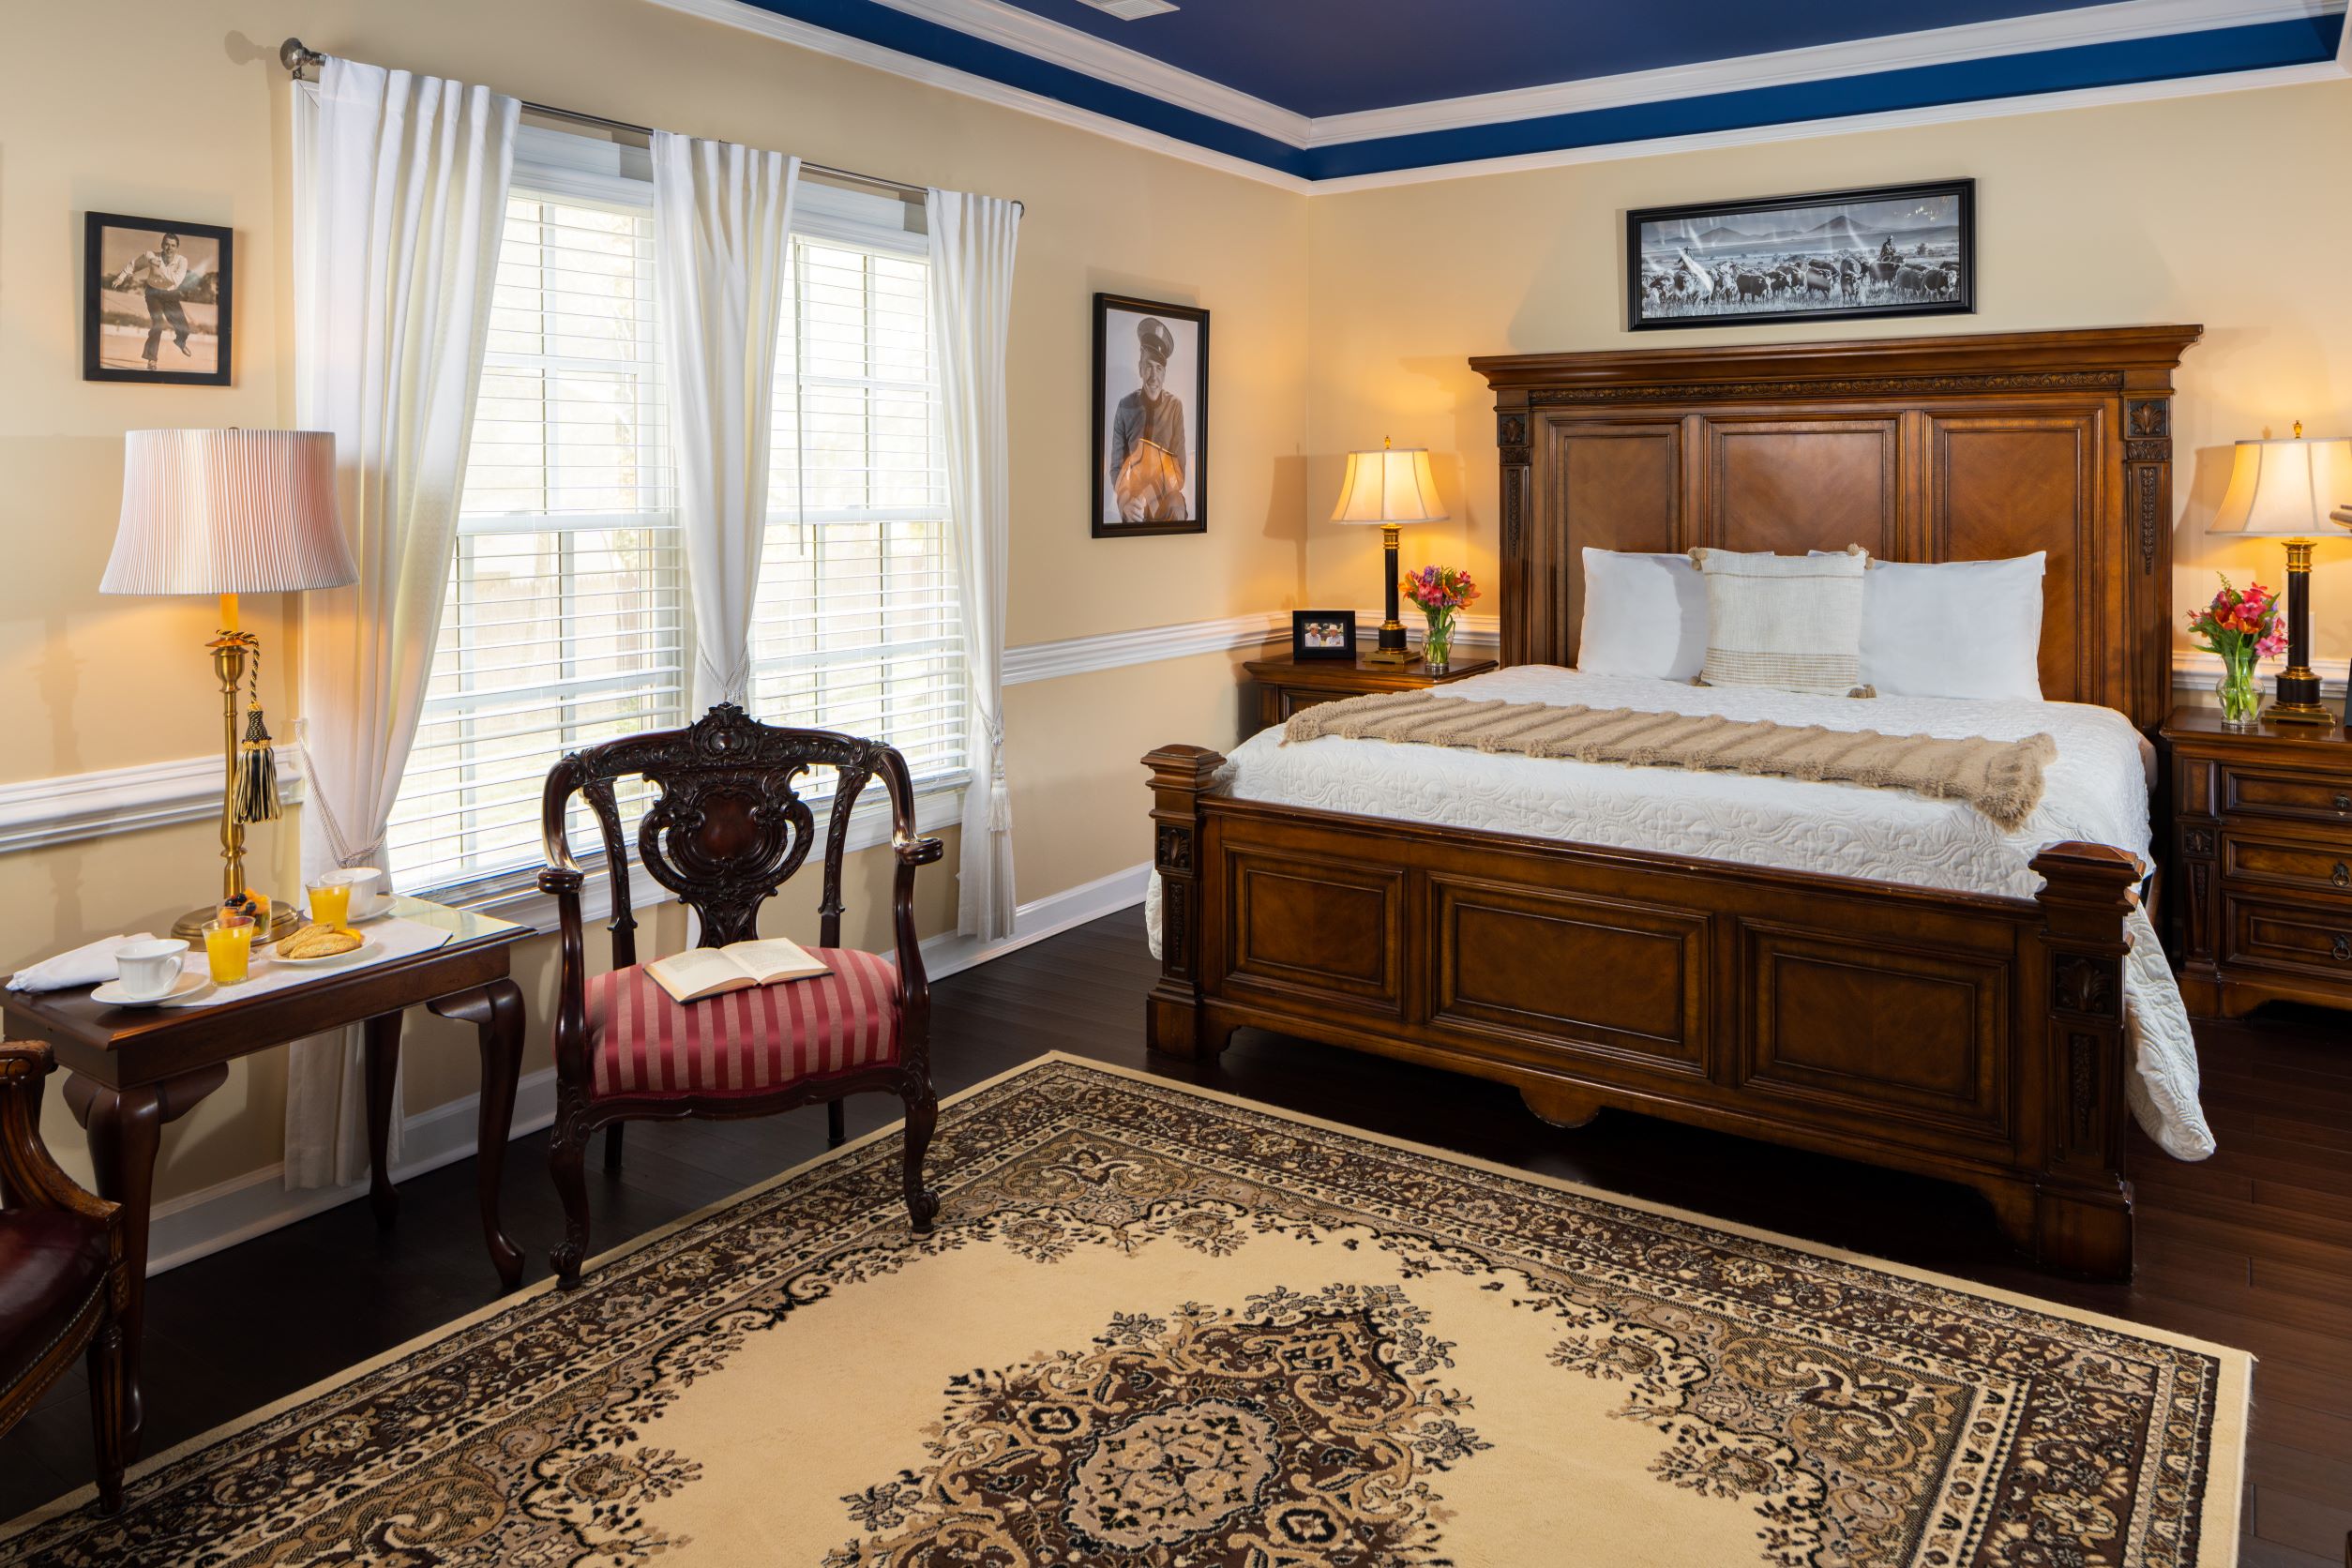 King bed, reagan bedroom, hardwood floors